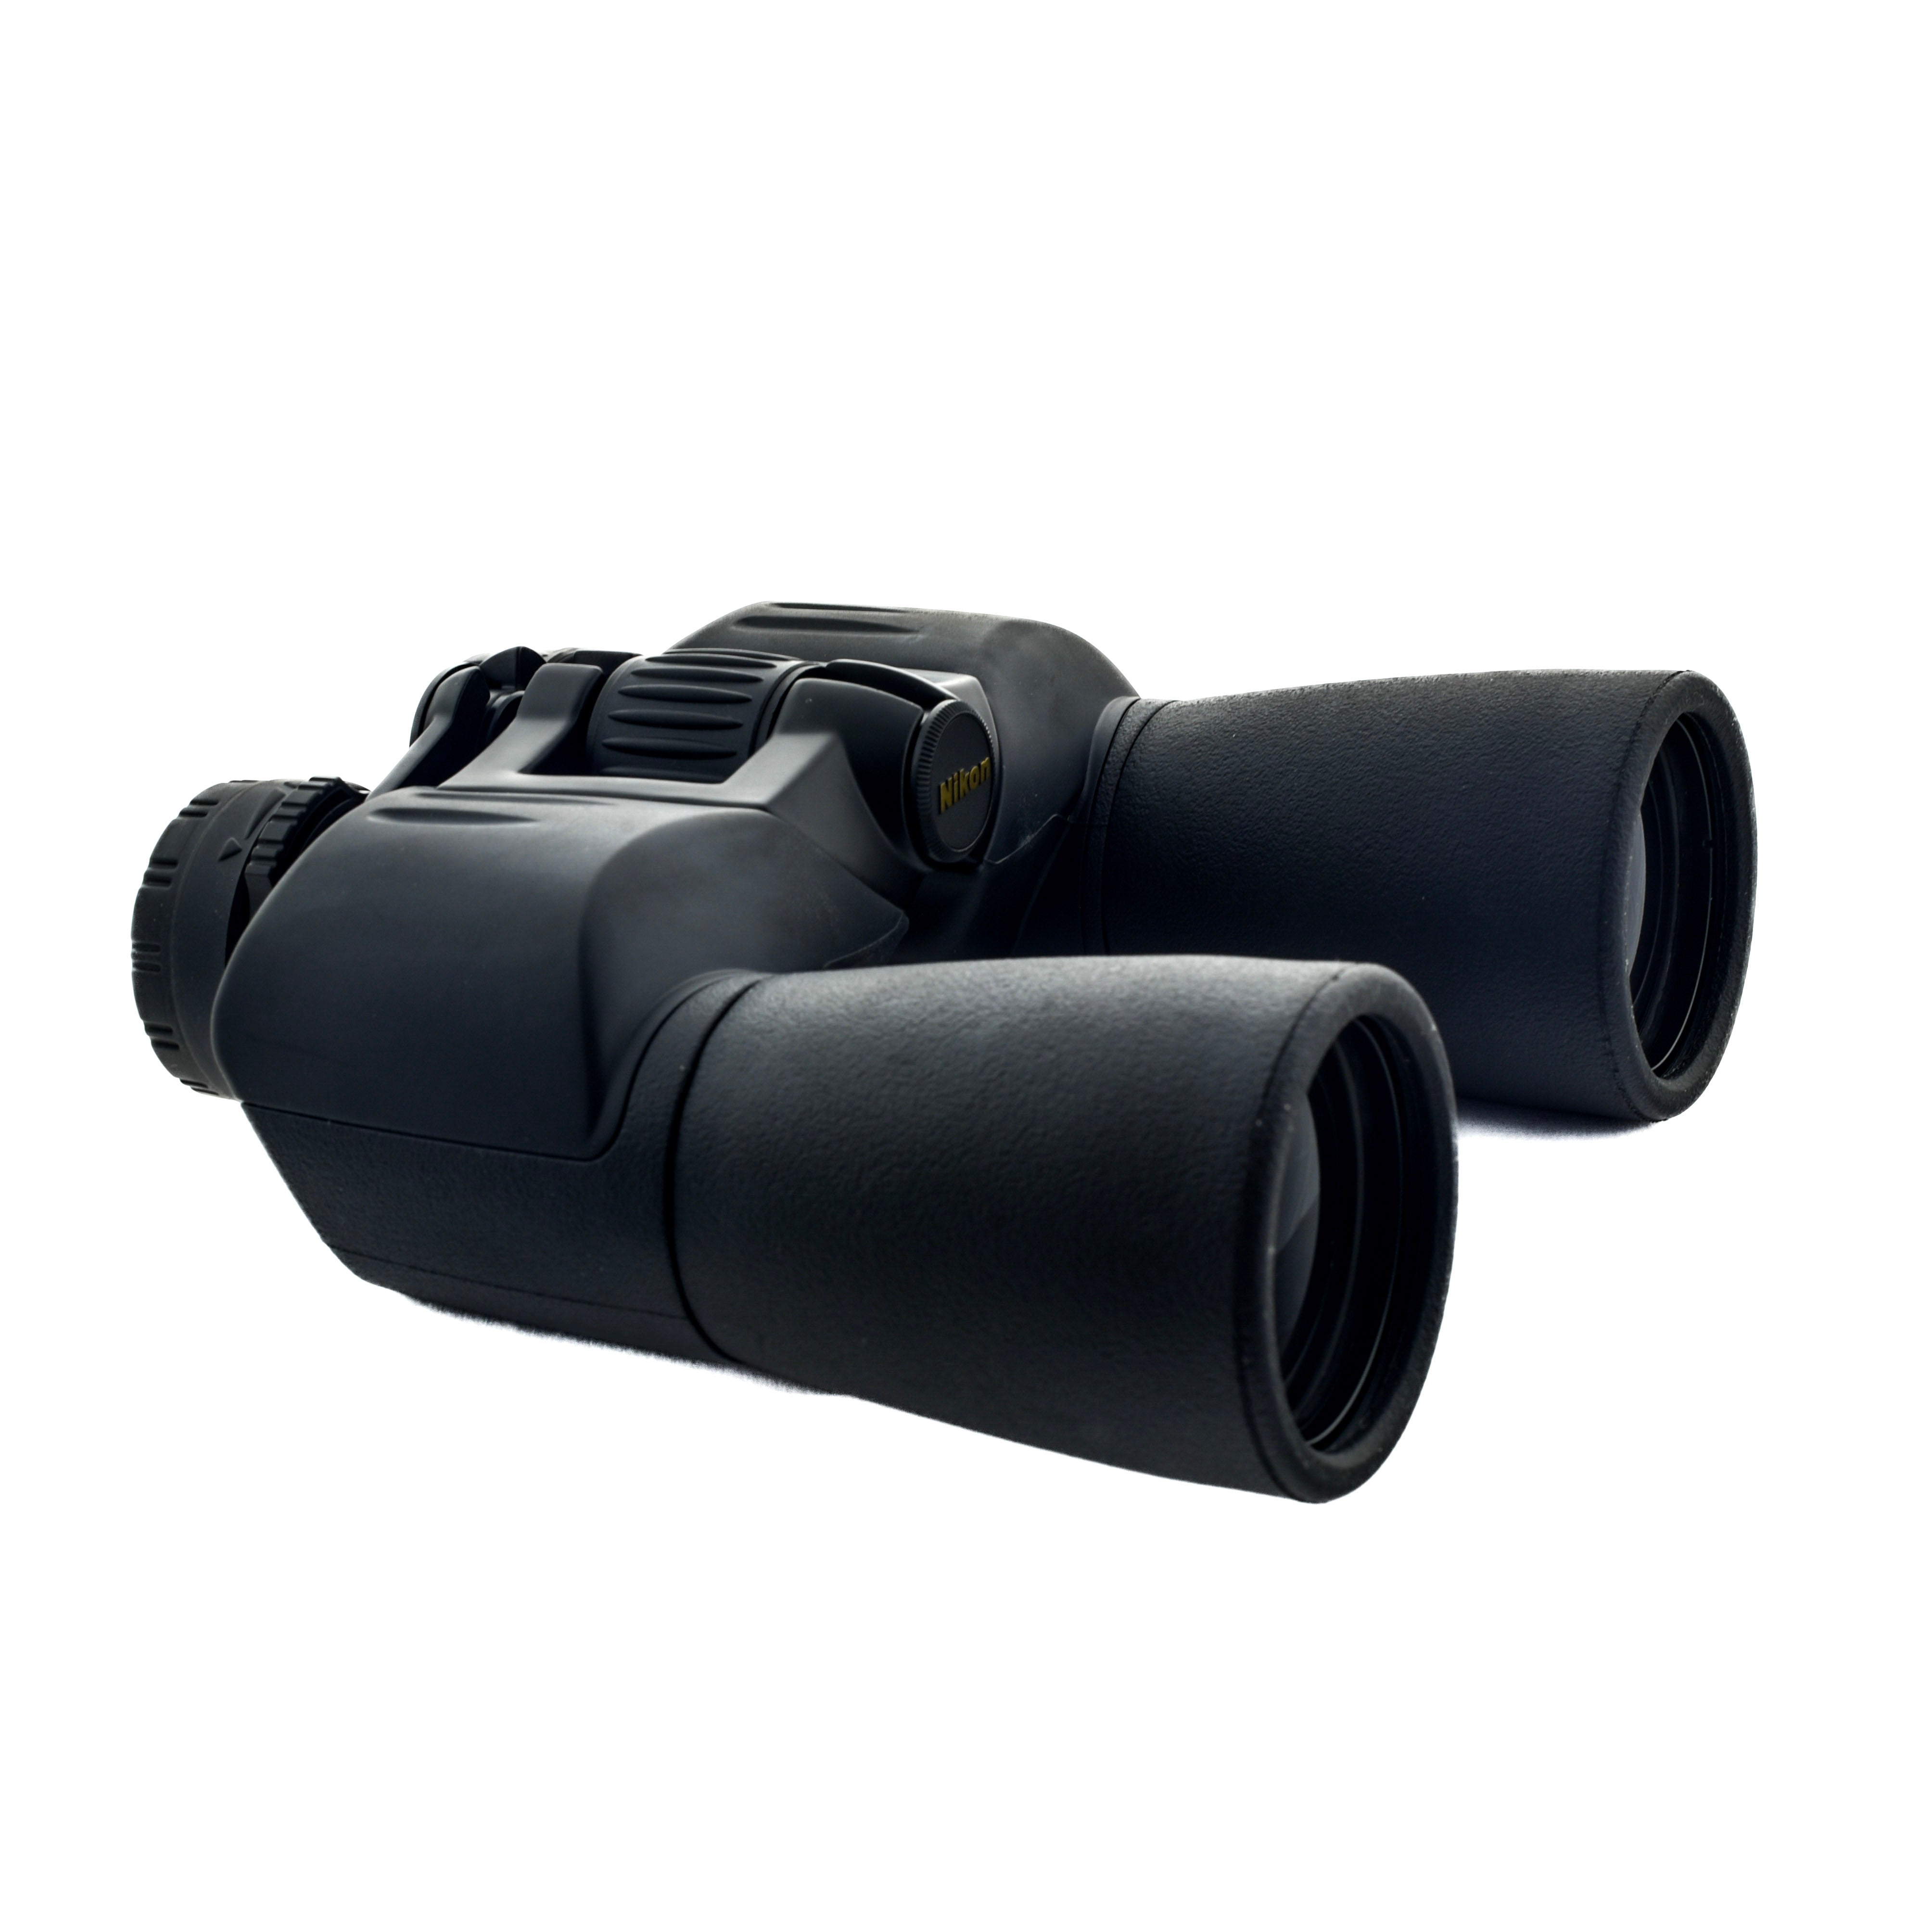 Nikon Action EX 12x50 Binoculars (Black)